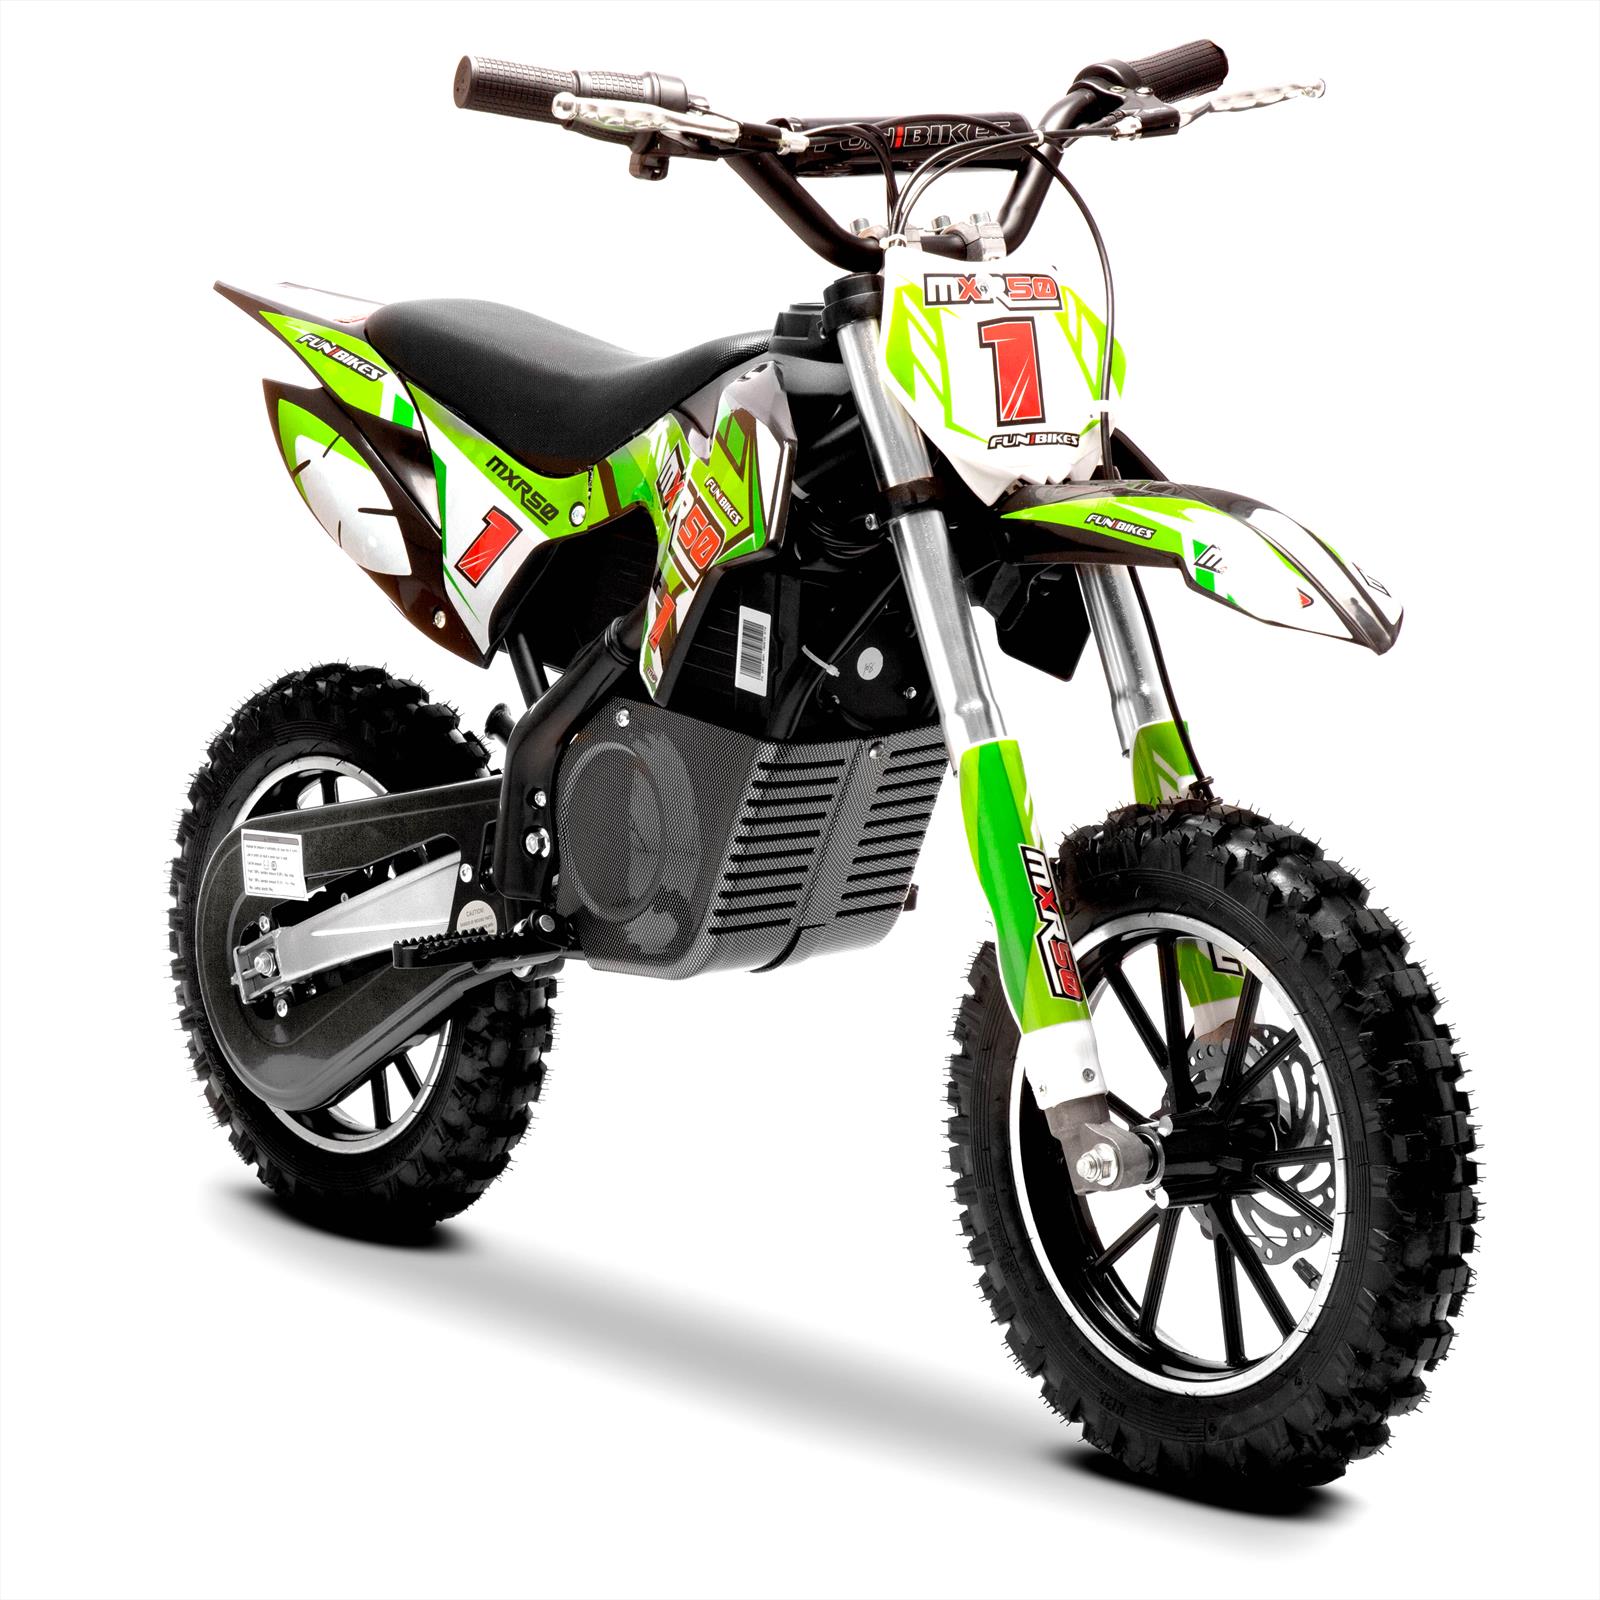 FunBikes MXR 500w Lithium Electric Motorbike 61cm Green/Black Kids Dirt